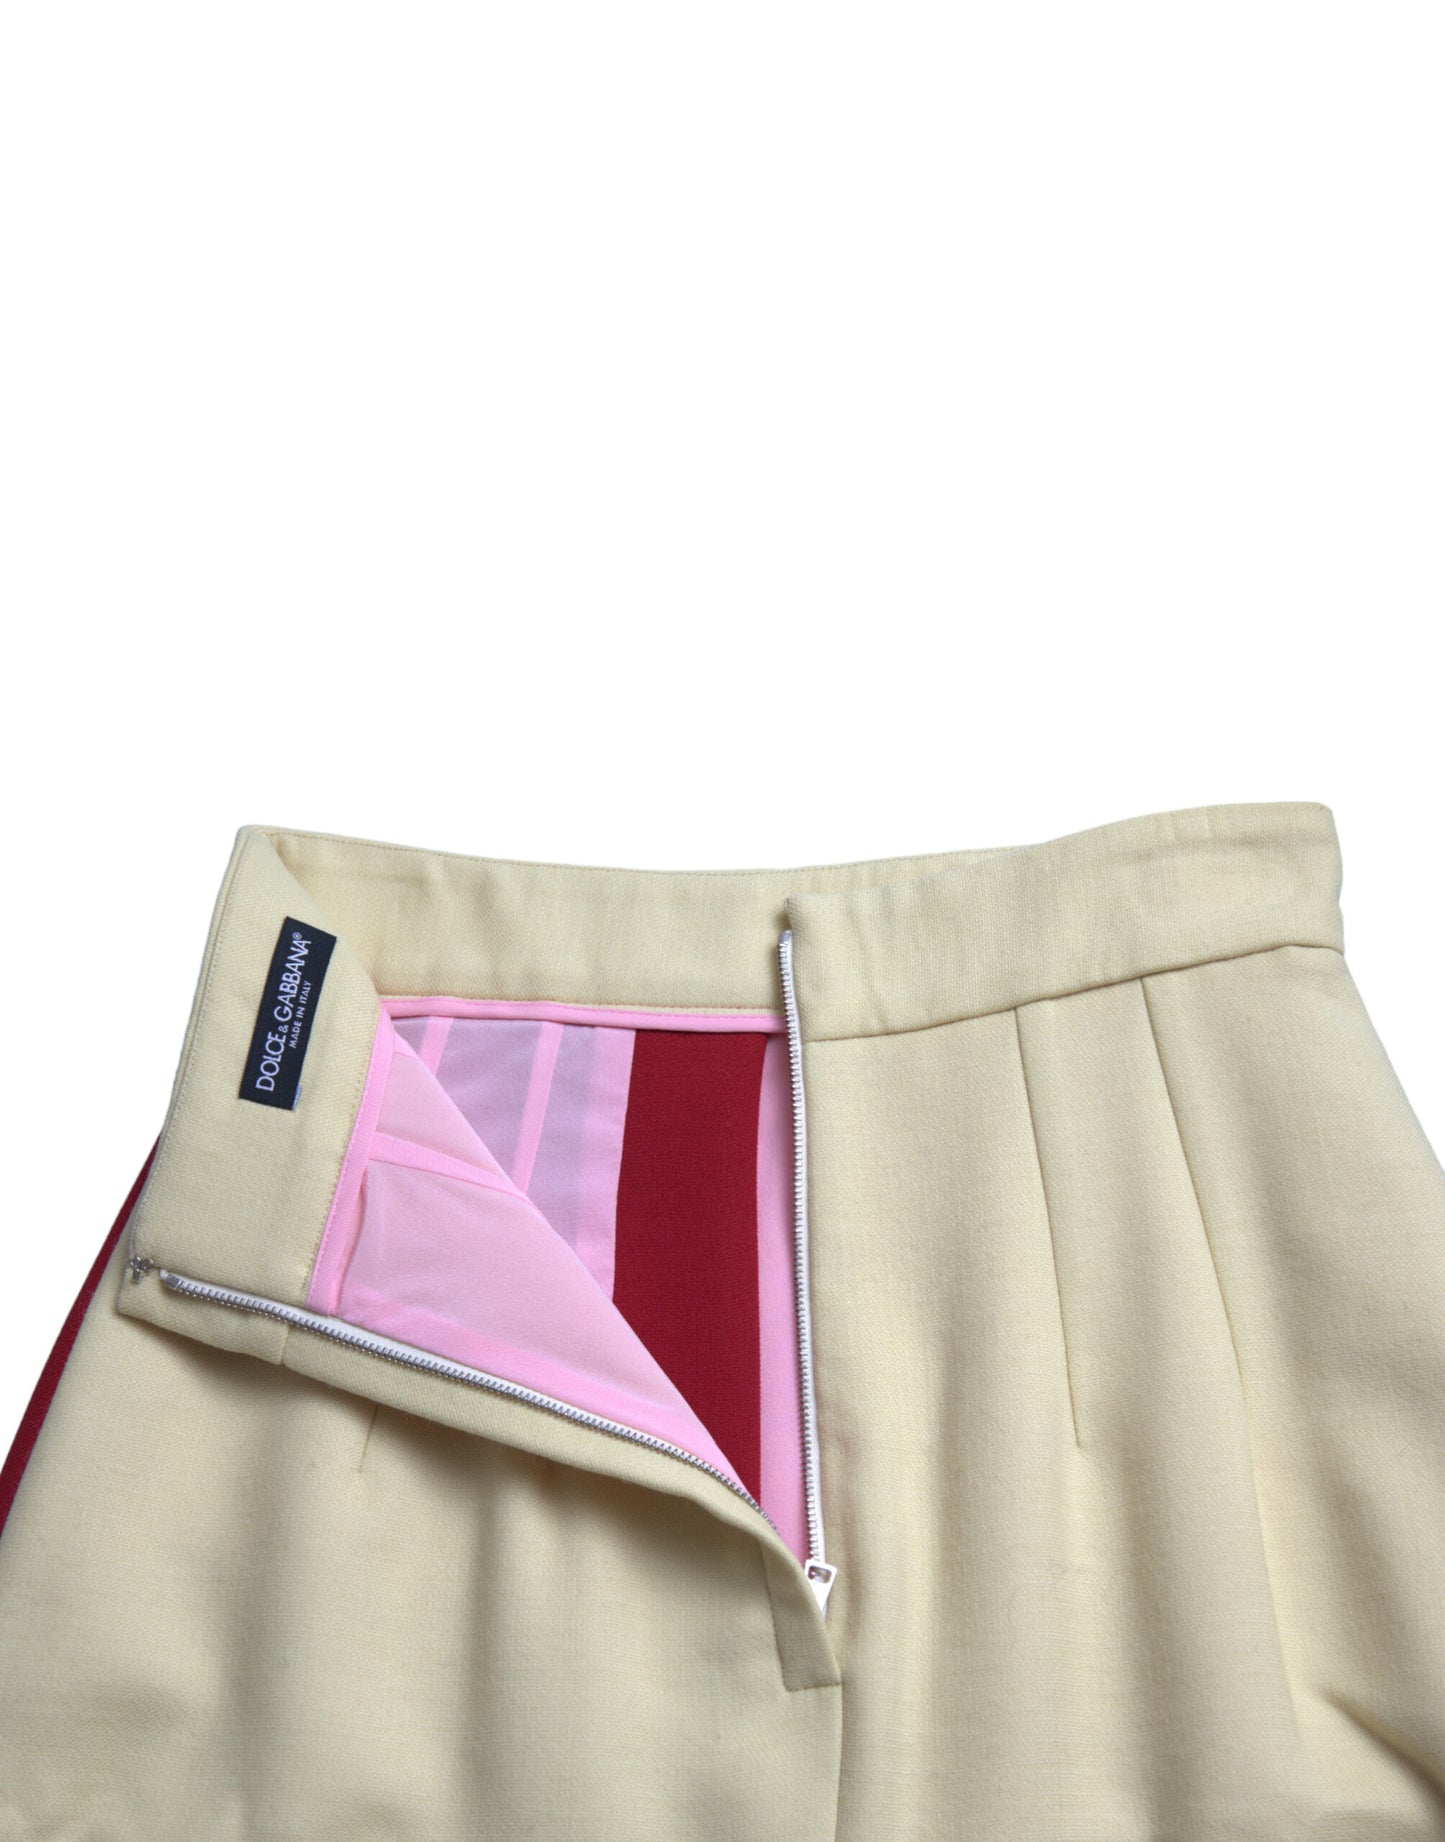 Elegant High Waist Mini A-Line Skirt